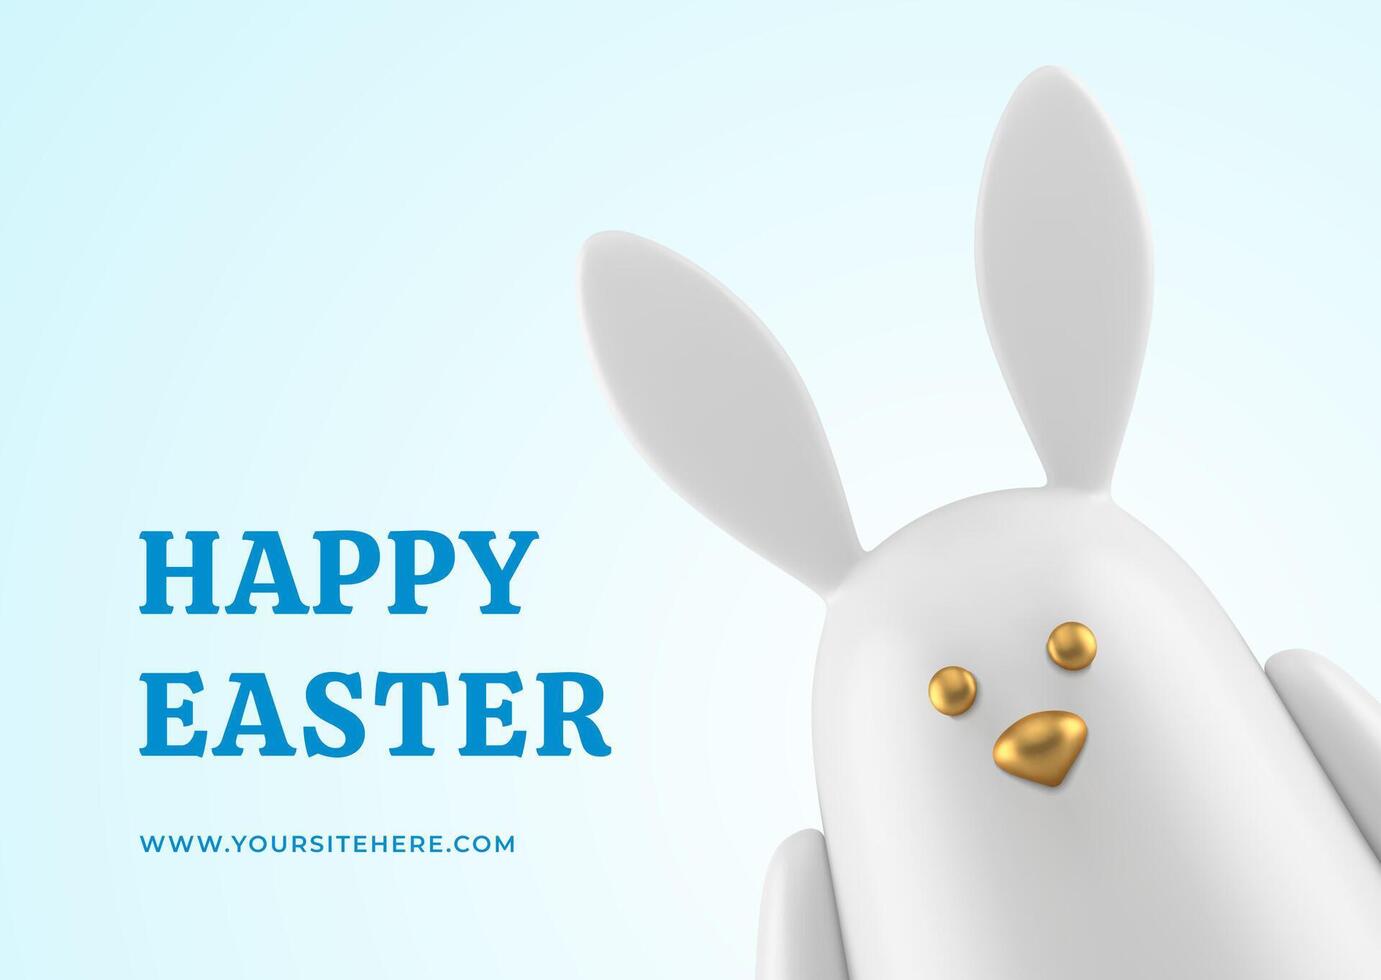 contento Pascua de Resurrección Conejo chuchería animal fiesta 3d saludo tarjeta diseño modelo realista vector